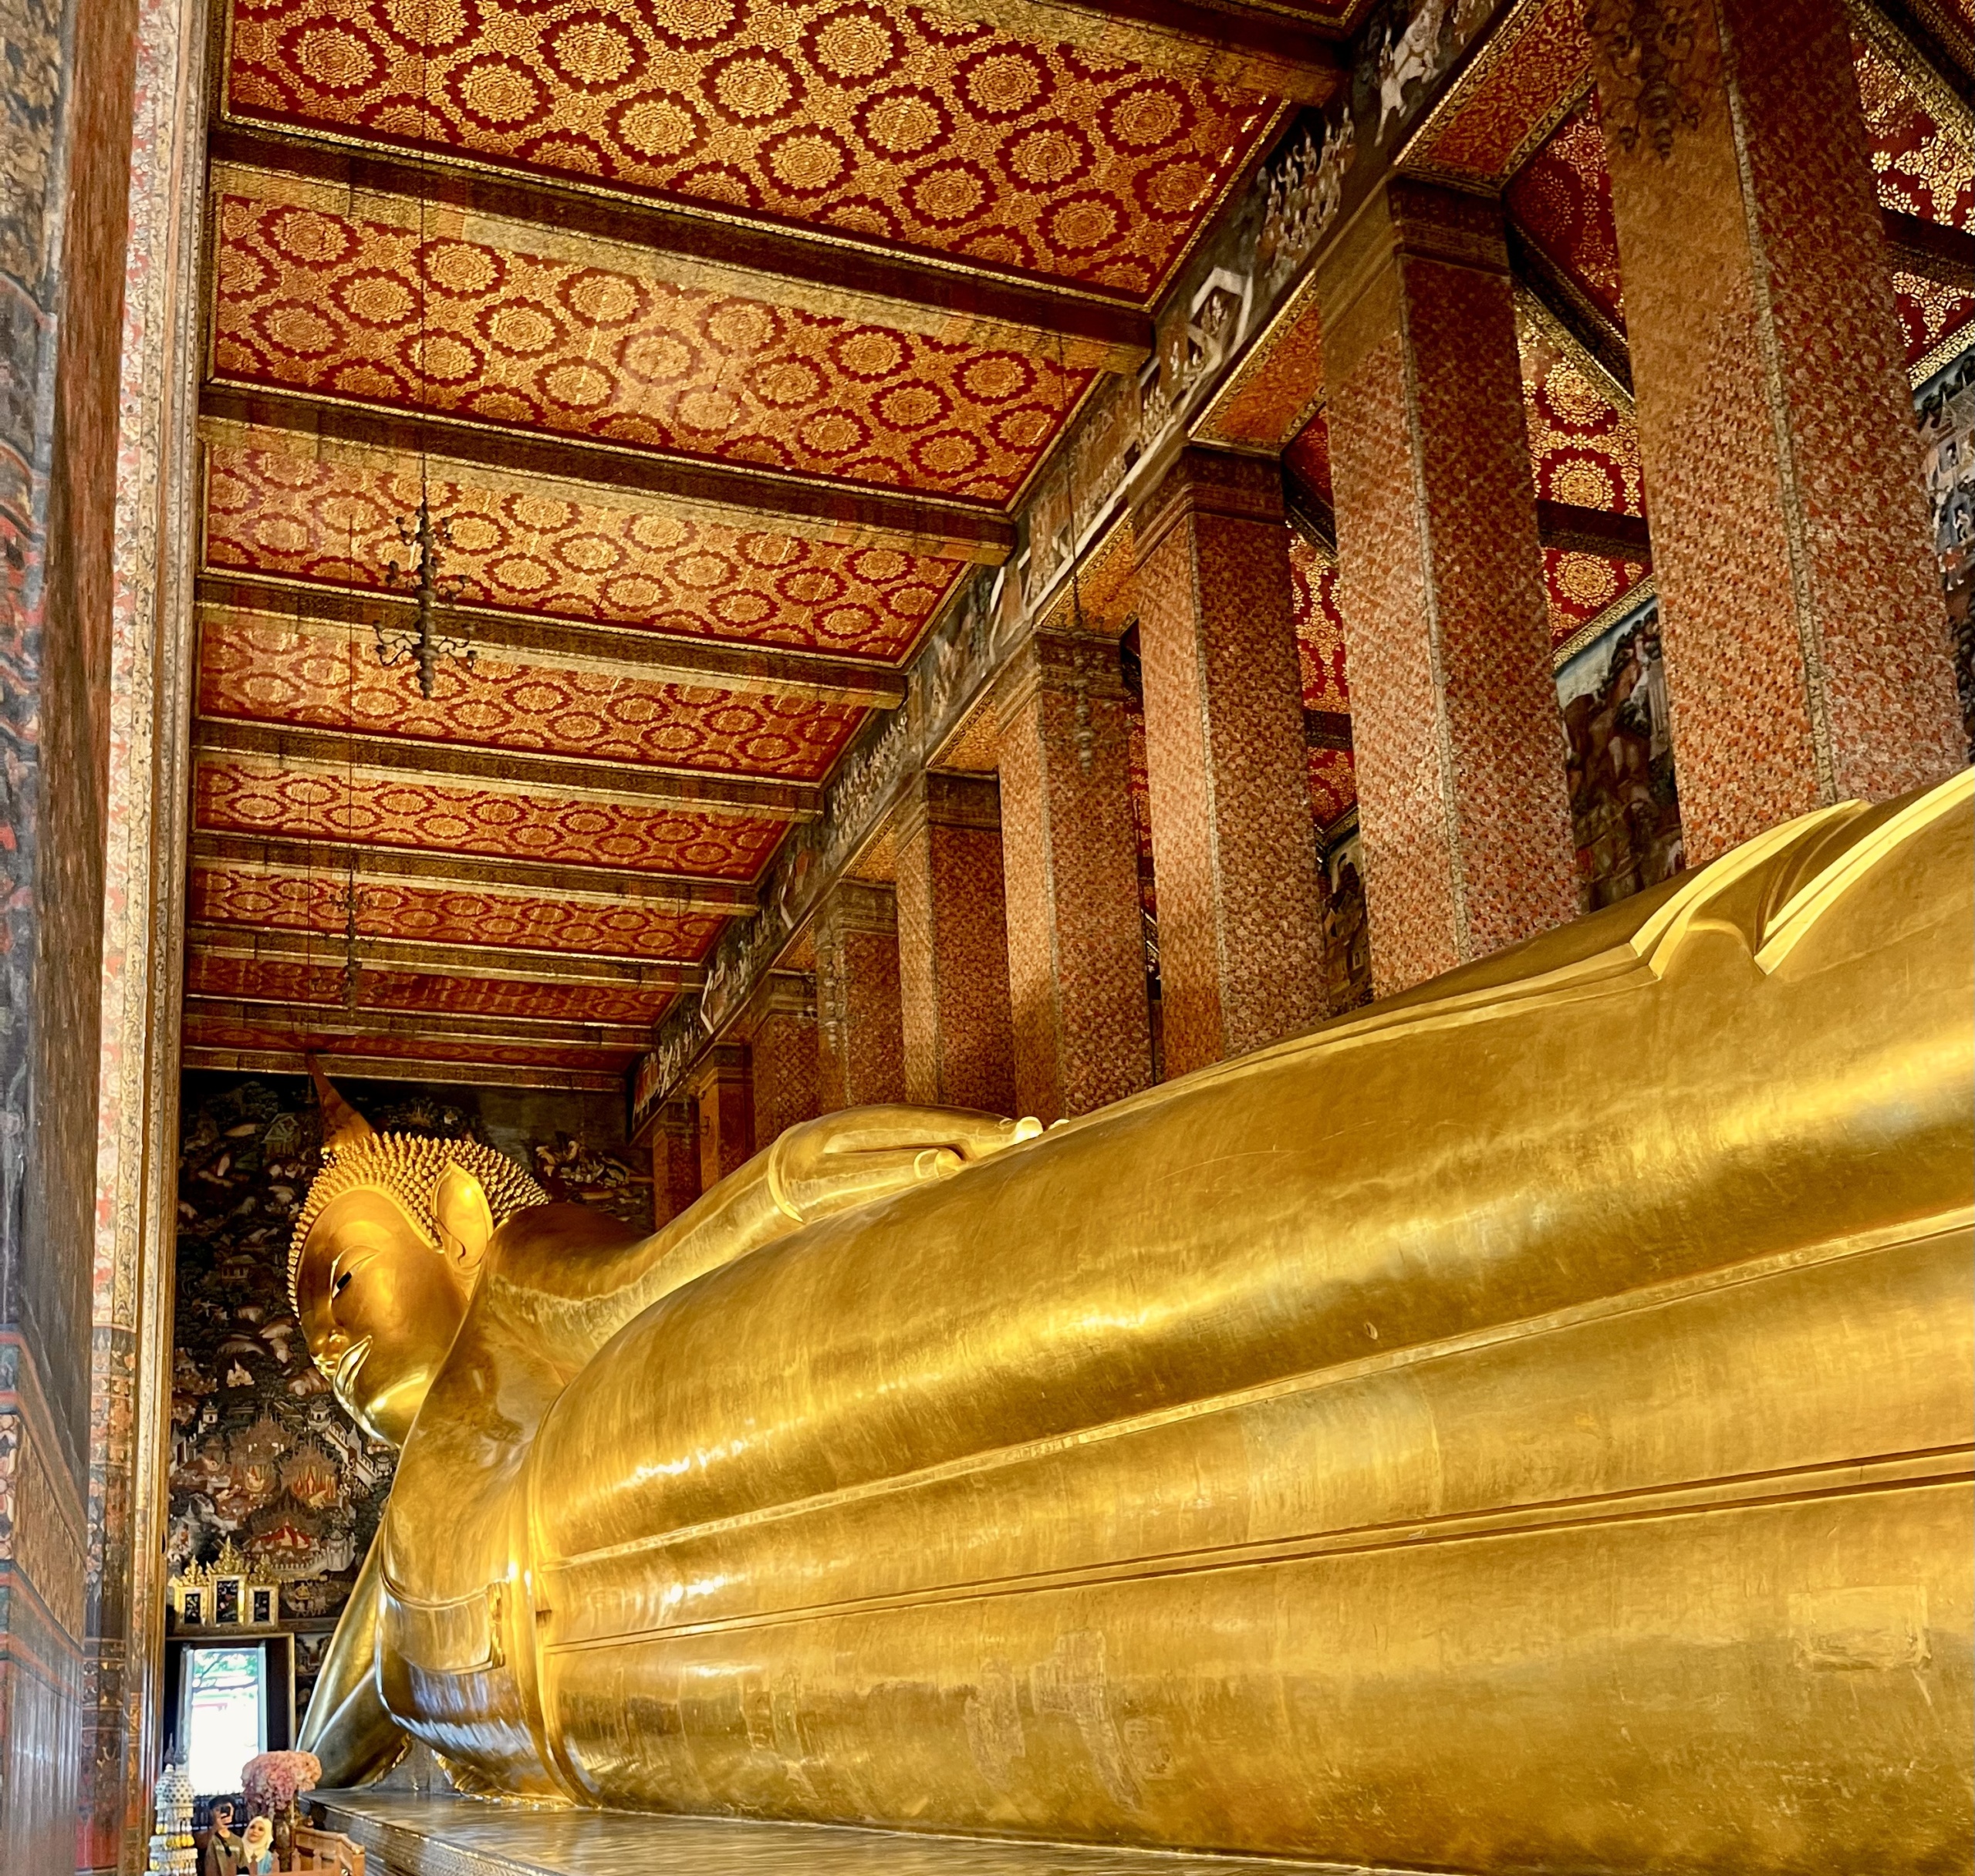 Bangkok in zeven impressies: Wat Pho